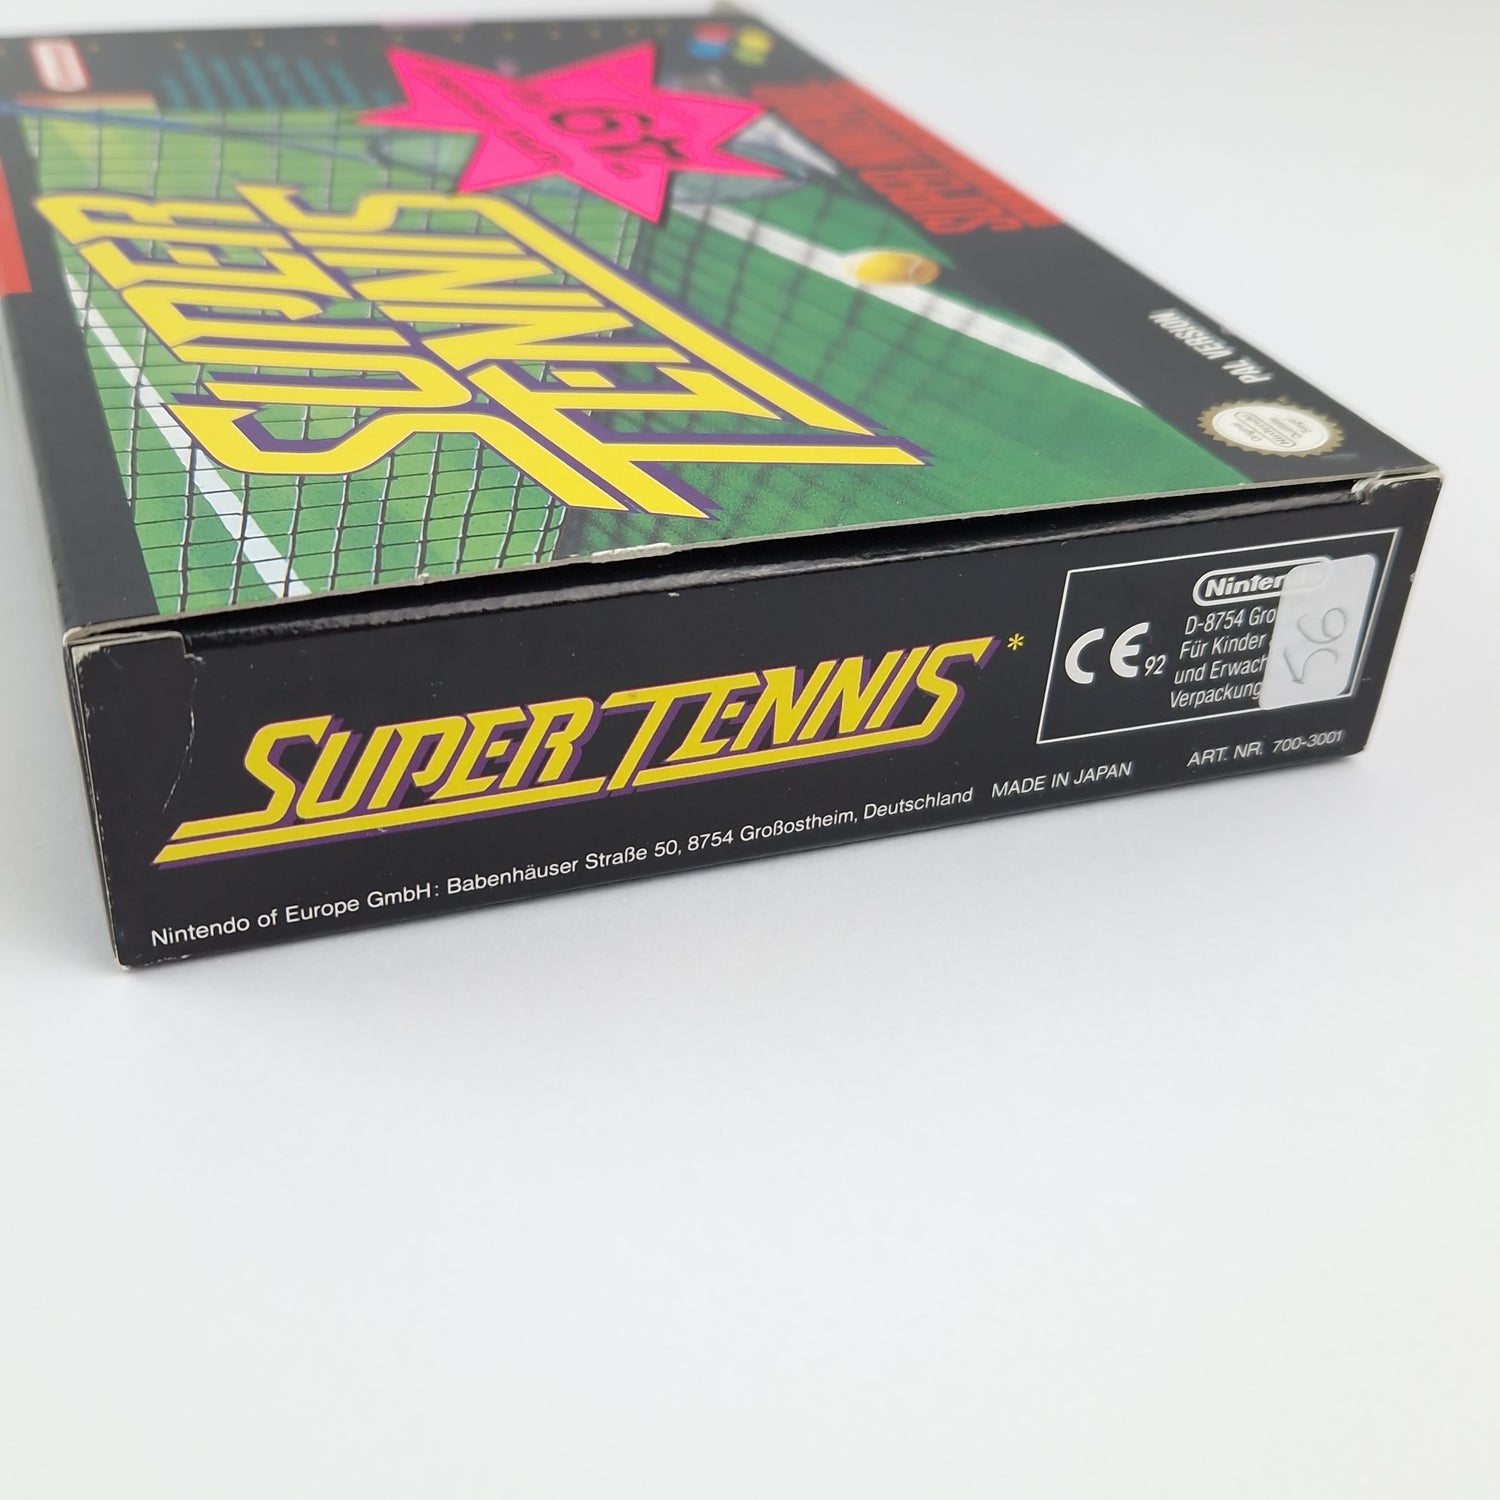 Super Nintendo Spiel : Super Tennis - SNES Modul Anleitung OVP cib / PAL Sport